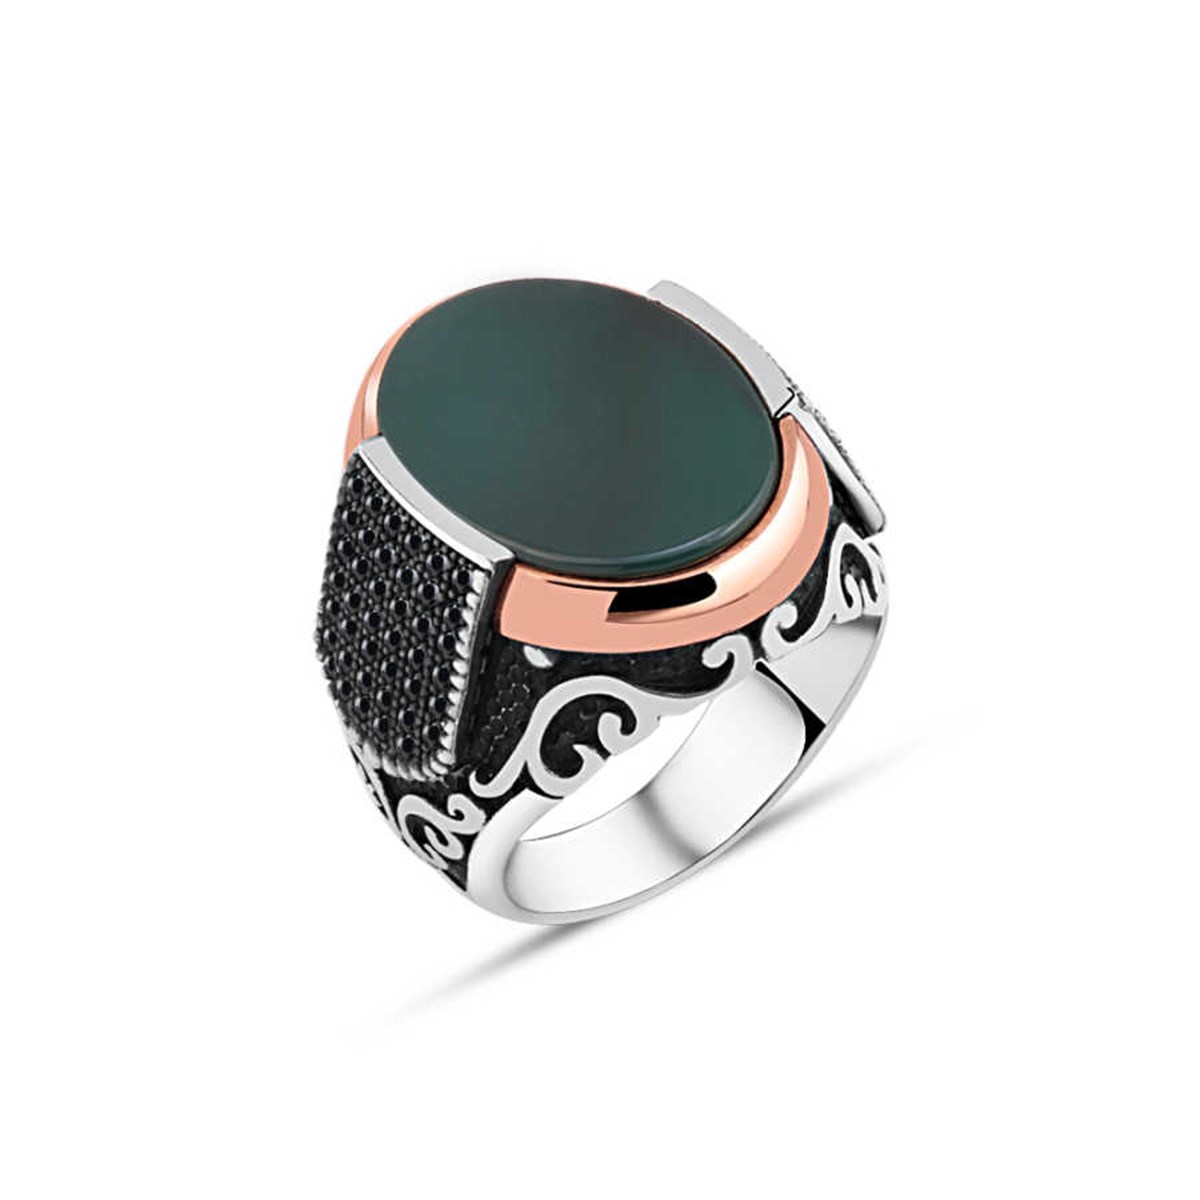 Plain Green Agate Stone Sterling Silver Men's Ring